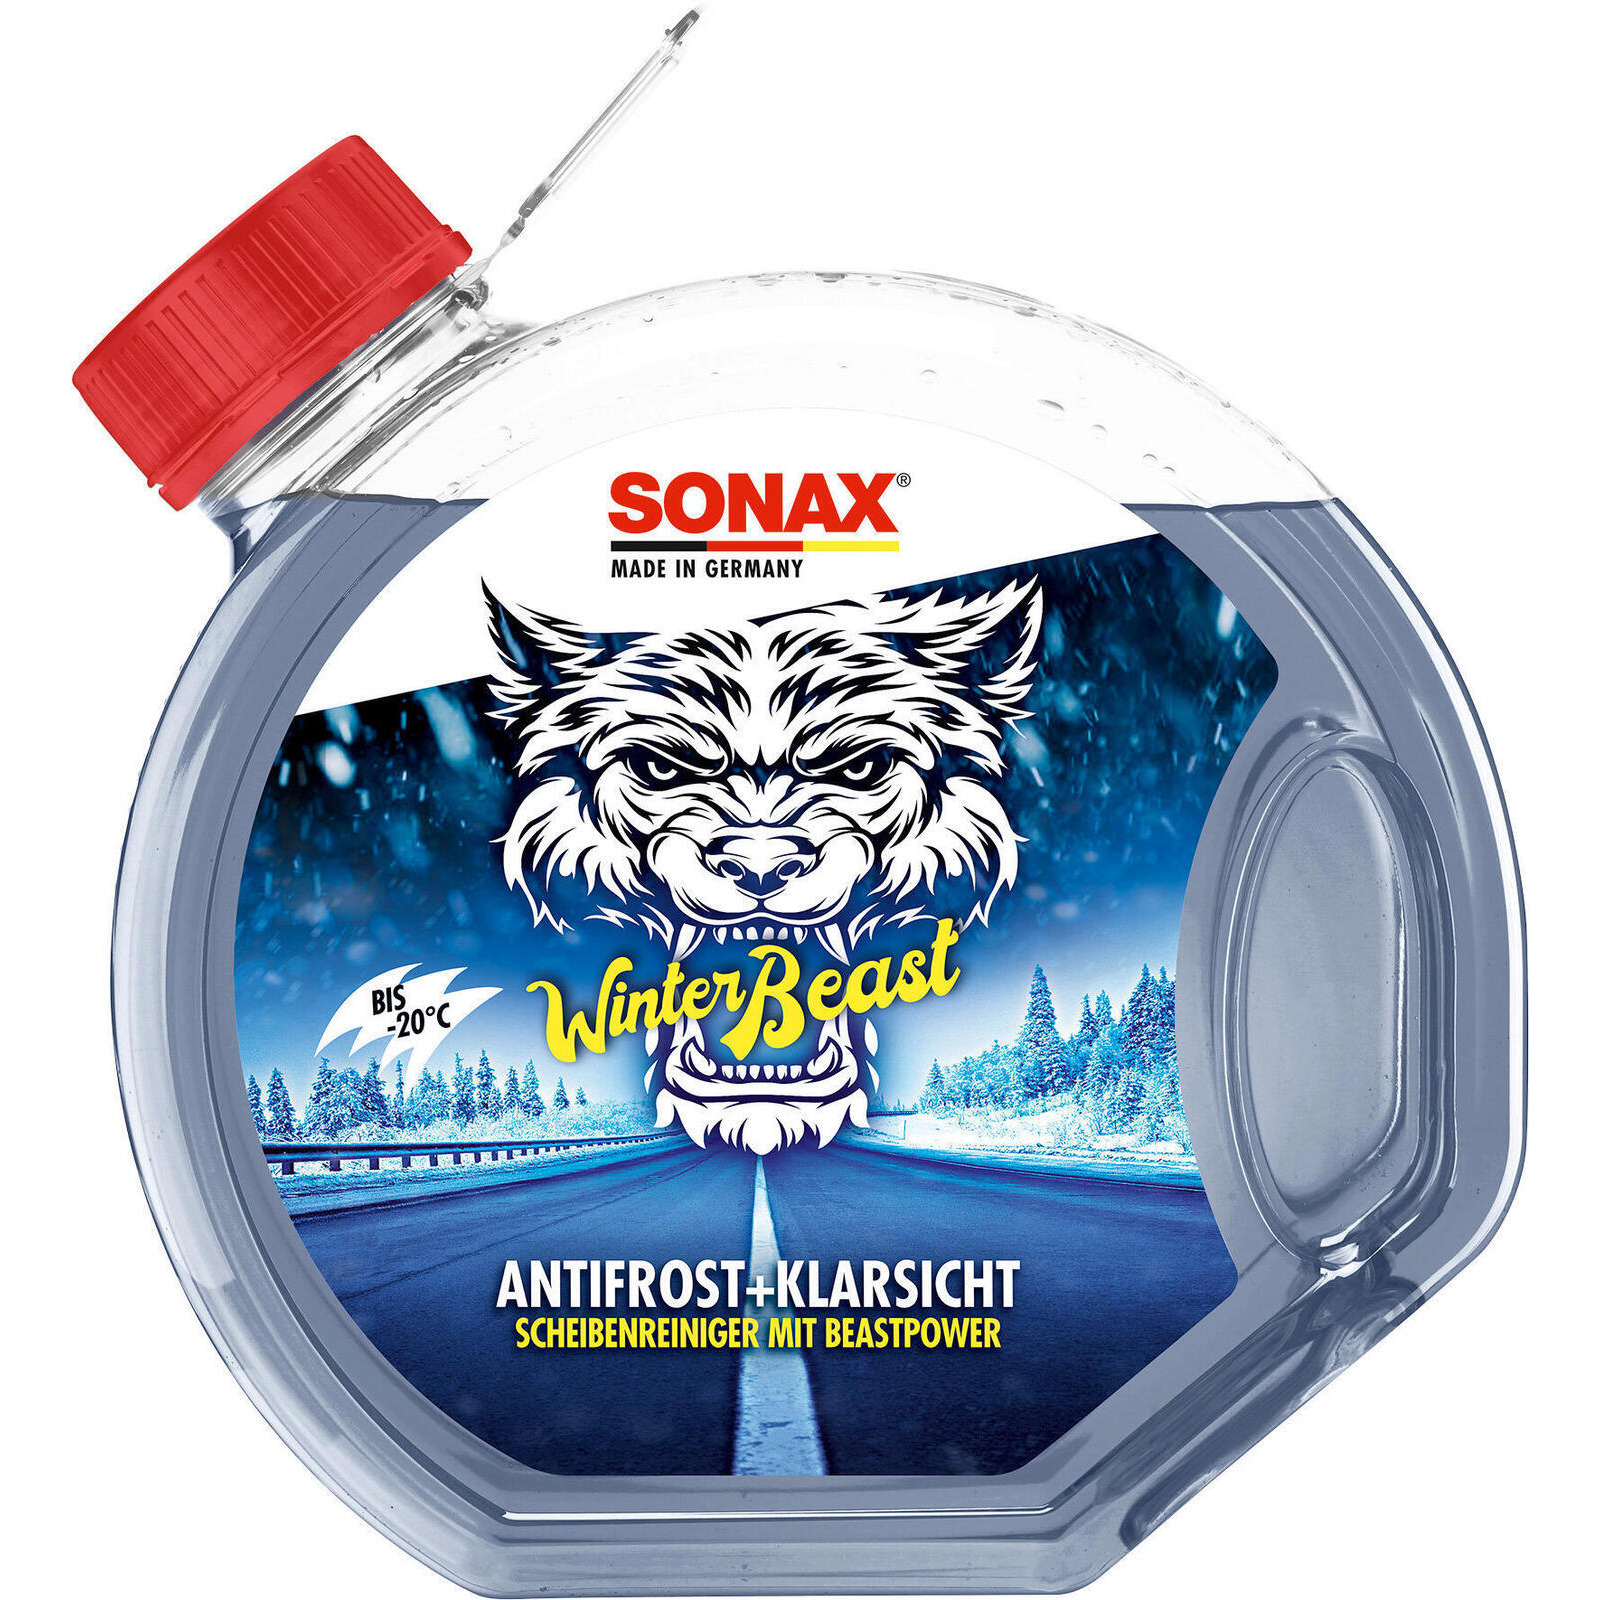 SONAX Antifreeze, window cleaning system WinterBeast AntiFrost+KlarSicht bis -20 °C